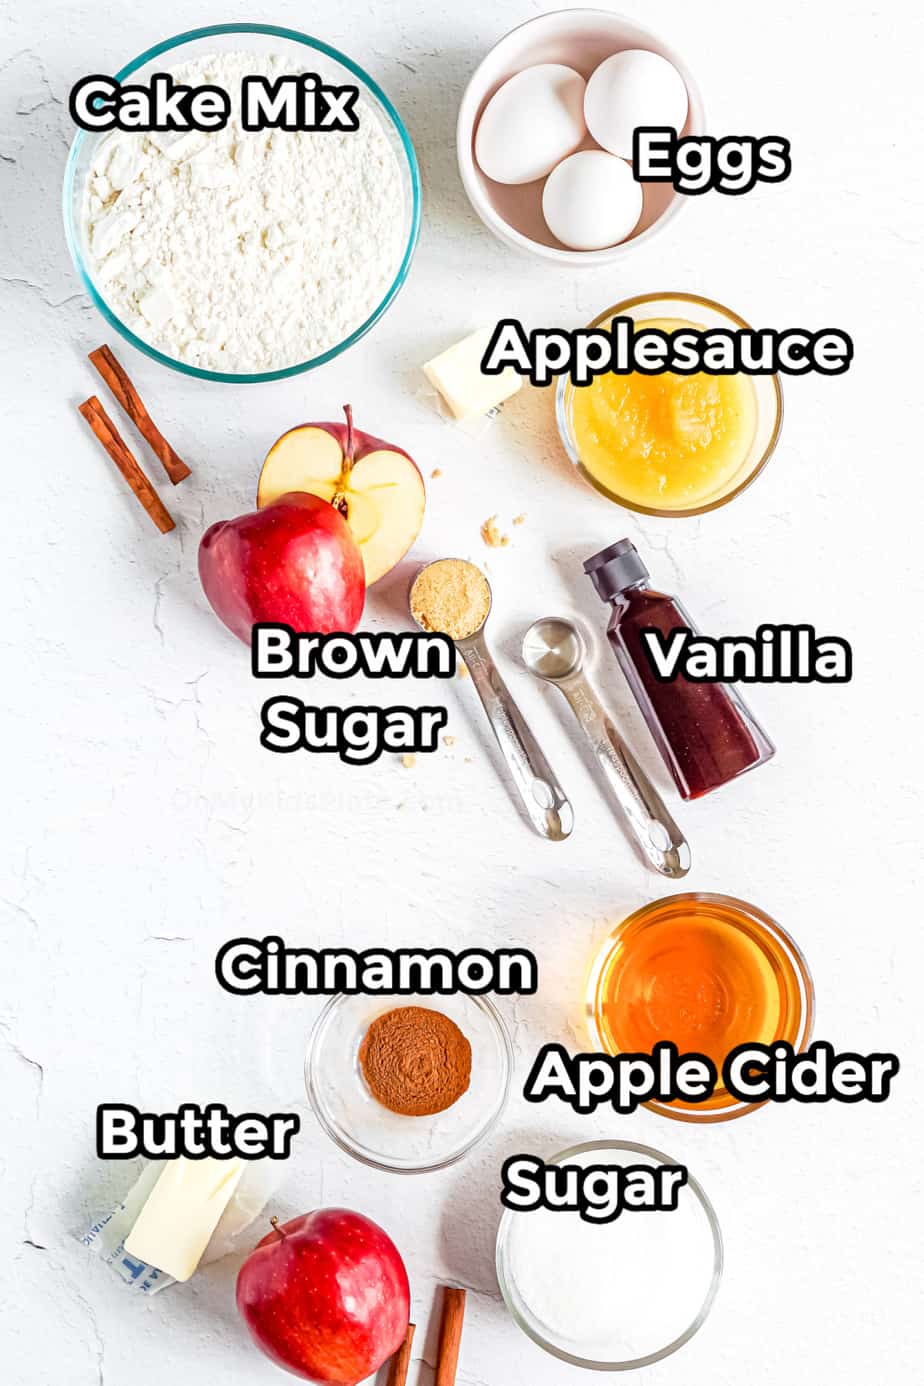 Ingredients for apple cider doughnut cake labeled.